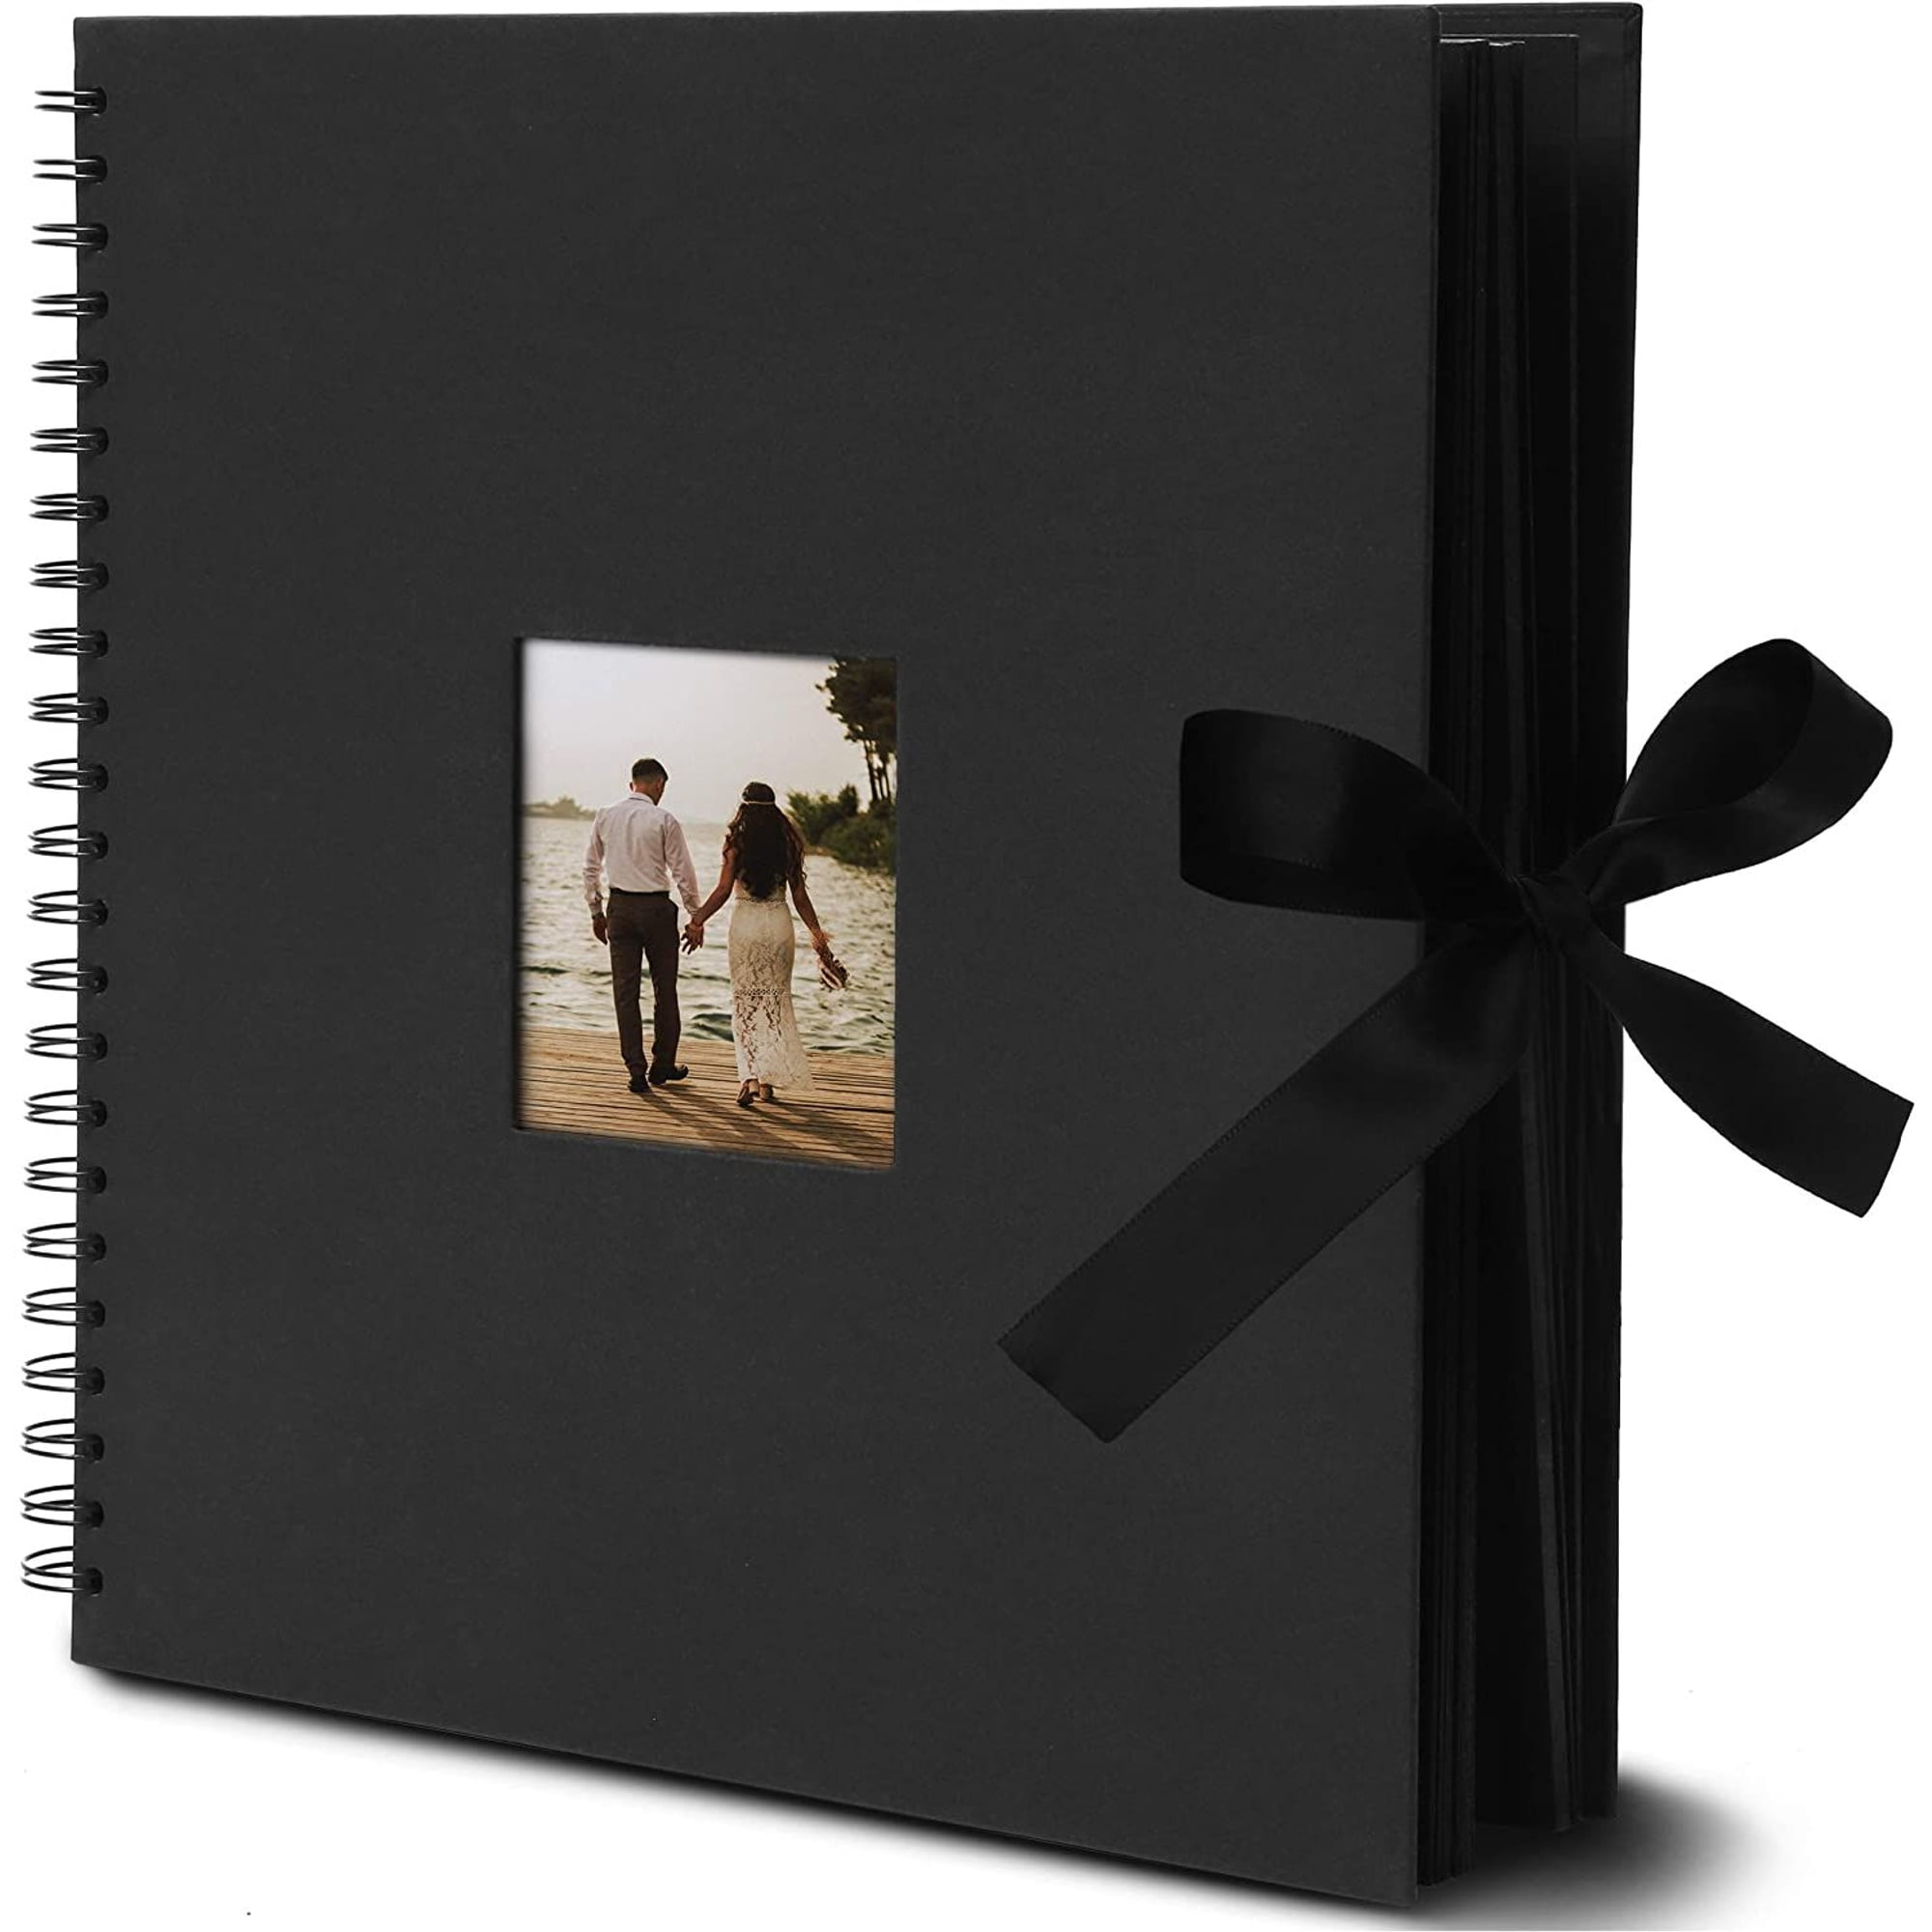 AIOR Scrapbook Photo Album, 12.6 x 8.3 inch 80 Black Pages, DIY Scrapbook Album Hardcover with 12 Metal Pens, Scrap Book for Wedding Anniversary